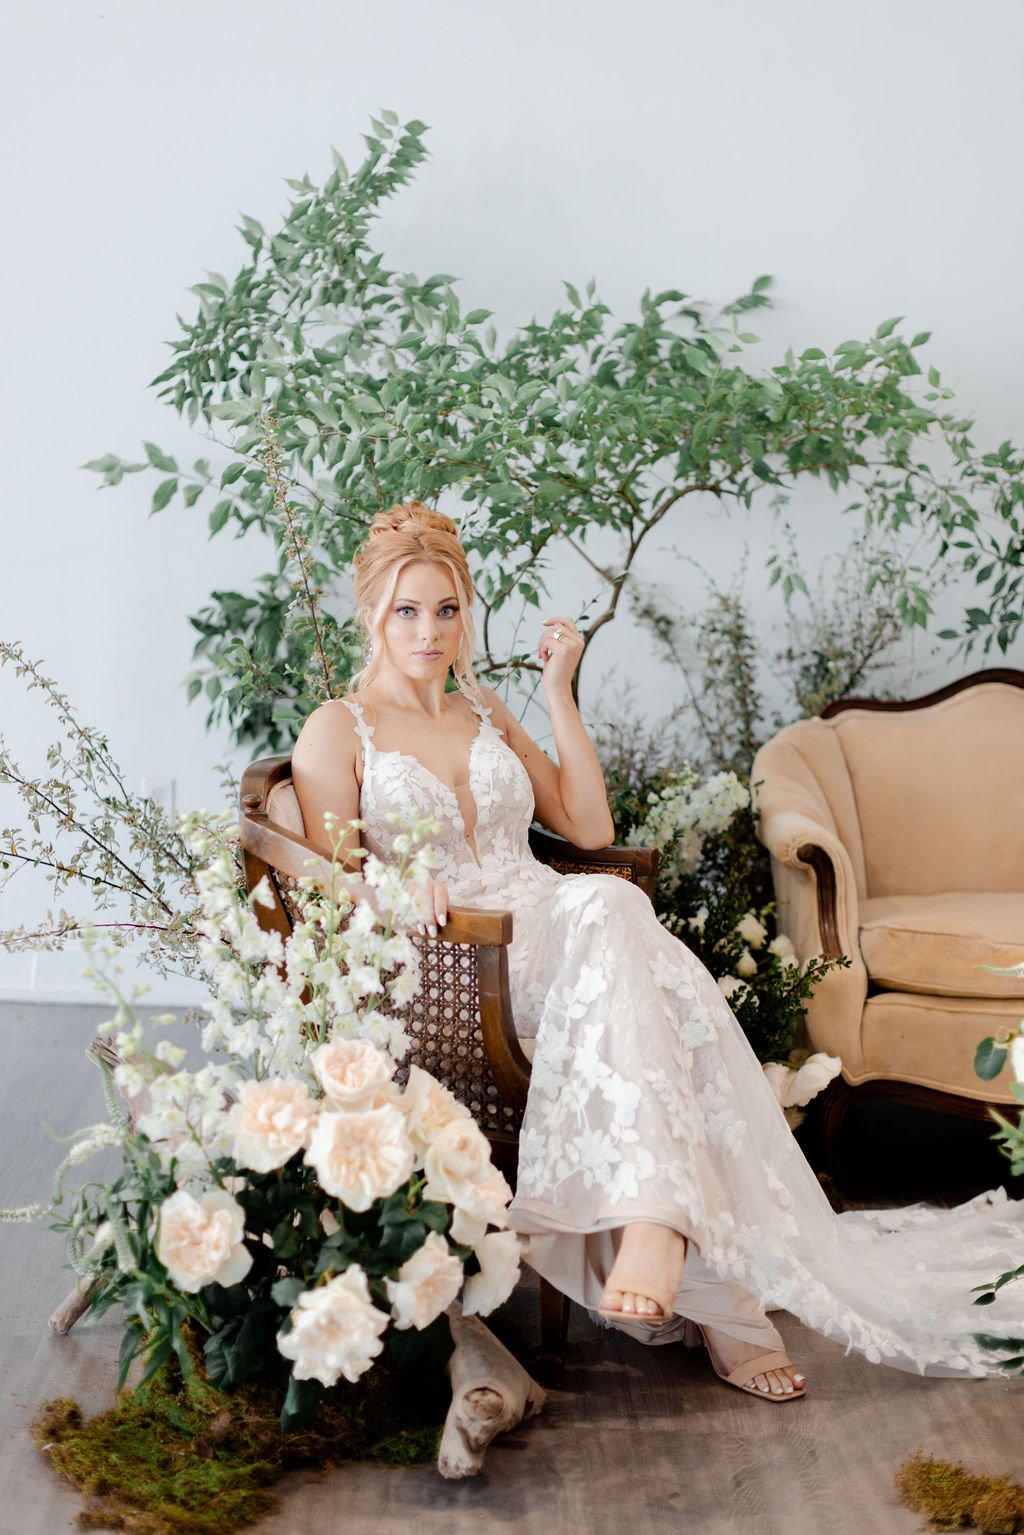 Plan-it-Terra-Missouri-Wedding-Planner-Terra-Nickelson-Woodland-Editorial-Bridal-Portrait